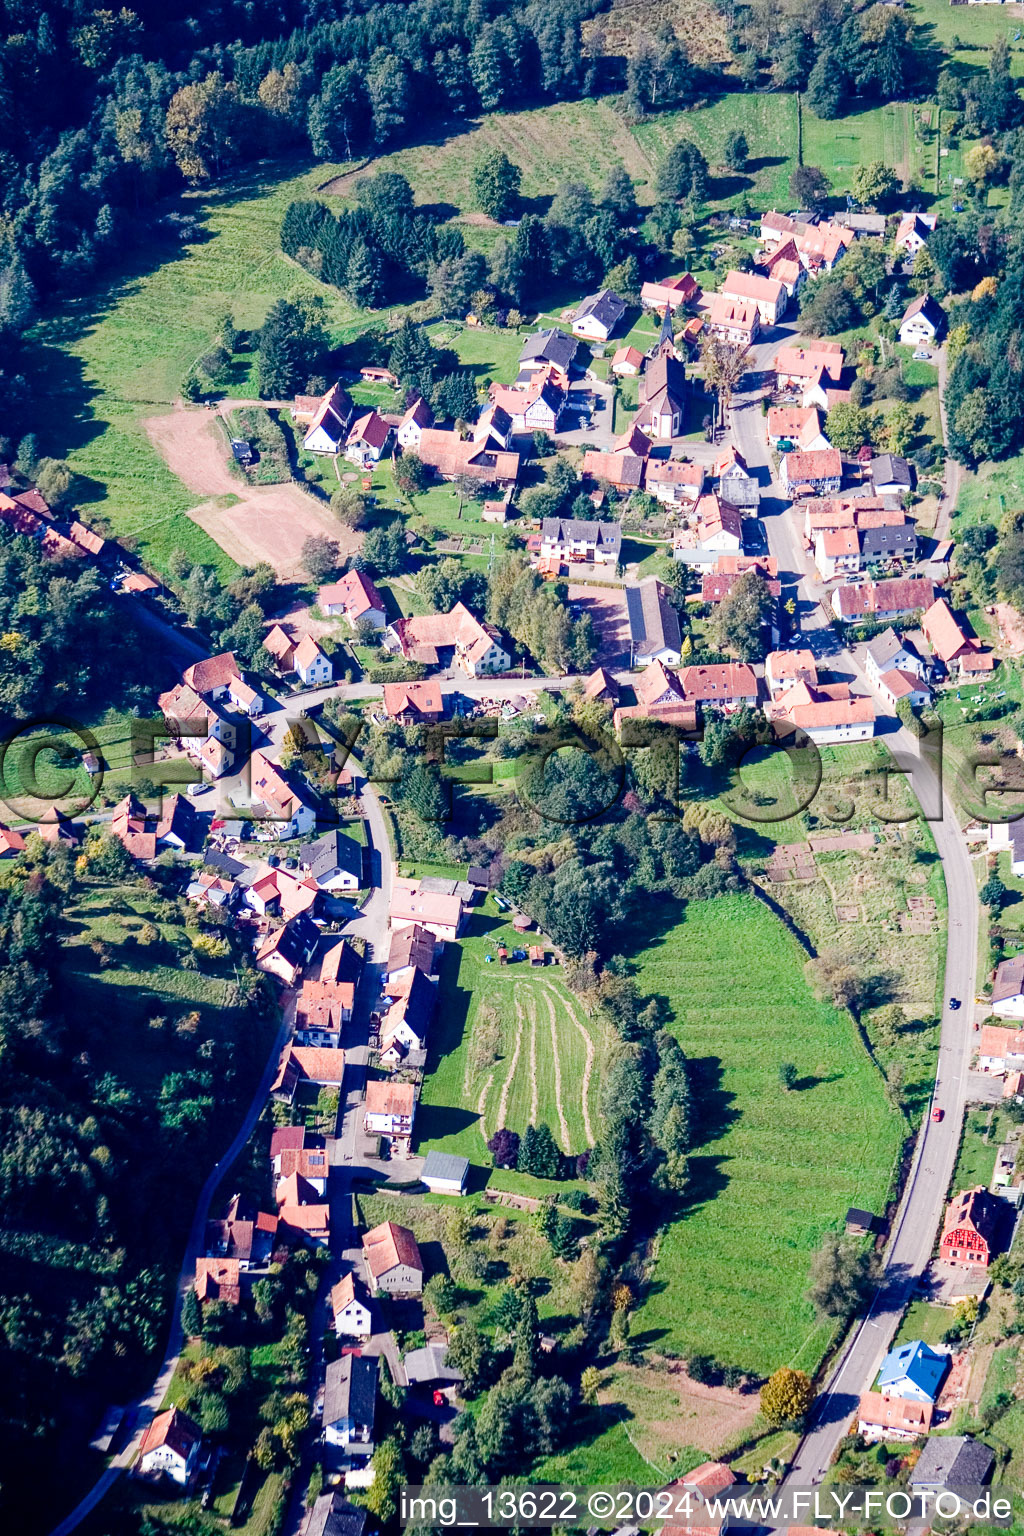 Village view of Bobenthal in the state Rhineland-Palatinate